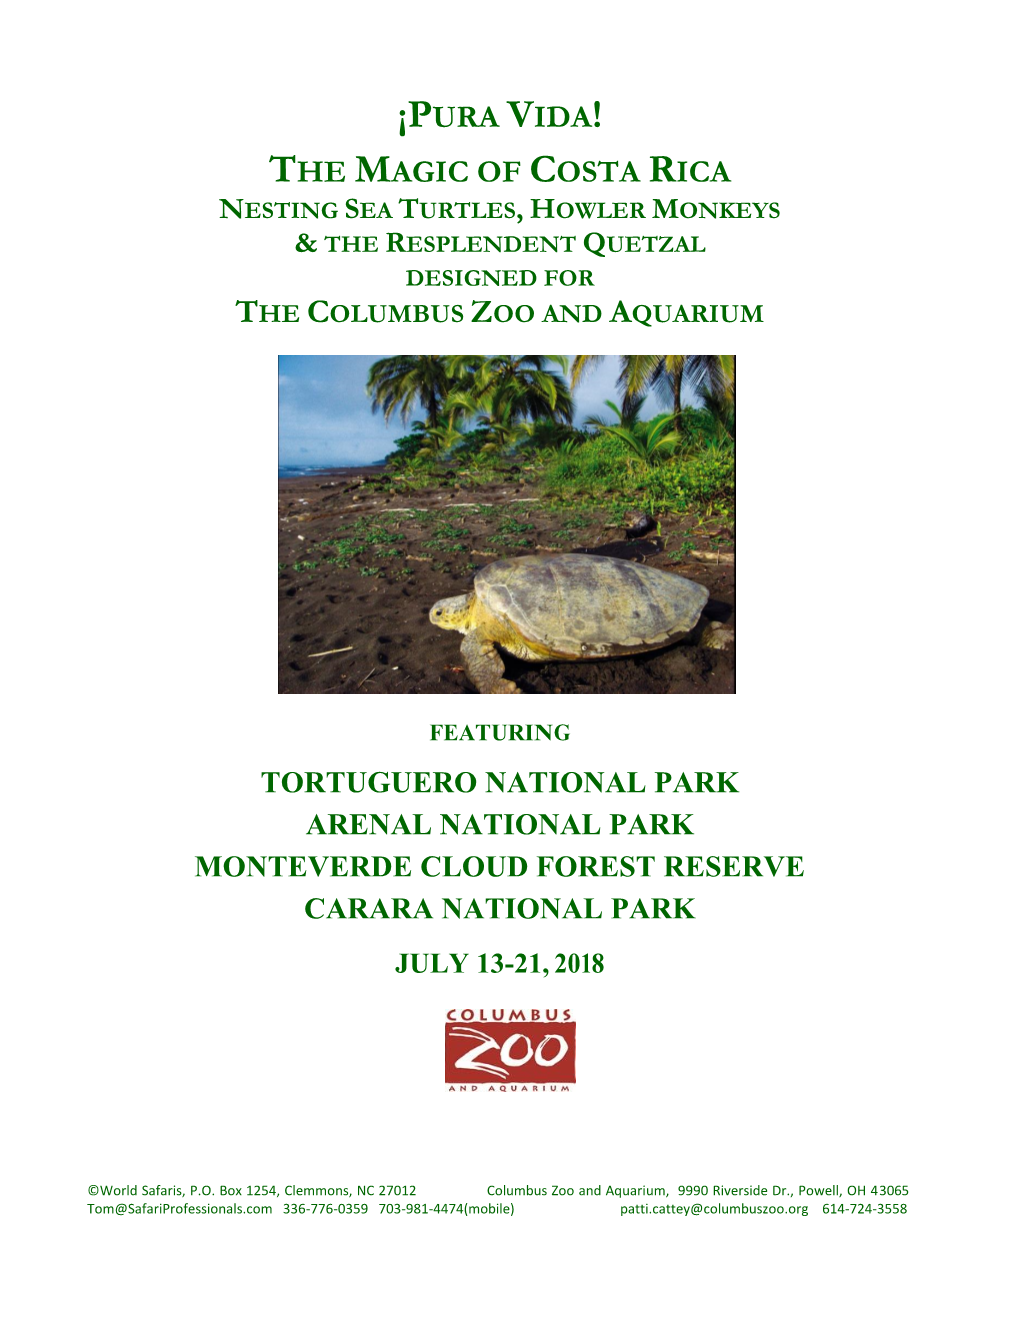 ¡Pura Vida! the Magic of Costa Rica Nesting Sea Turtles, Howler Monkeys & the Resplendent Quetzal Designed for the Columbus Zoo and Aquarium